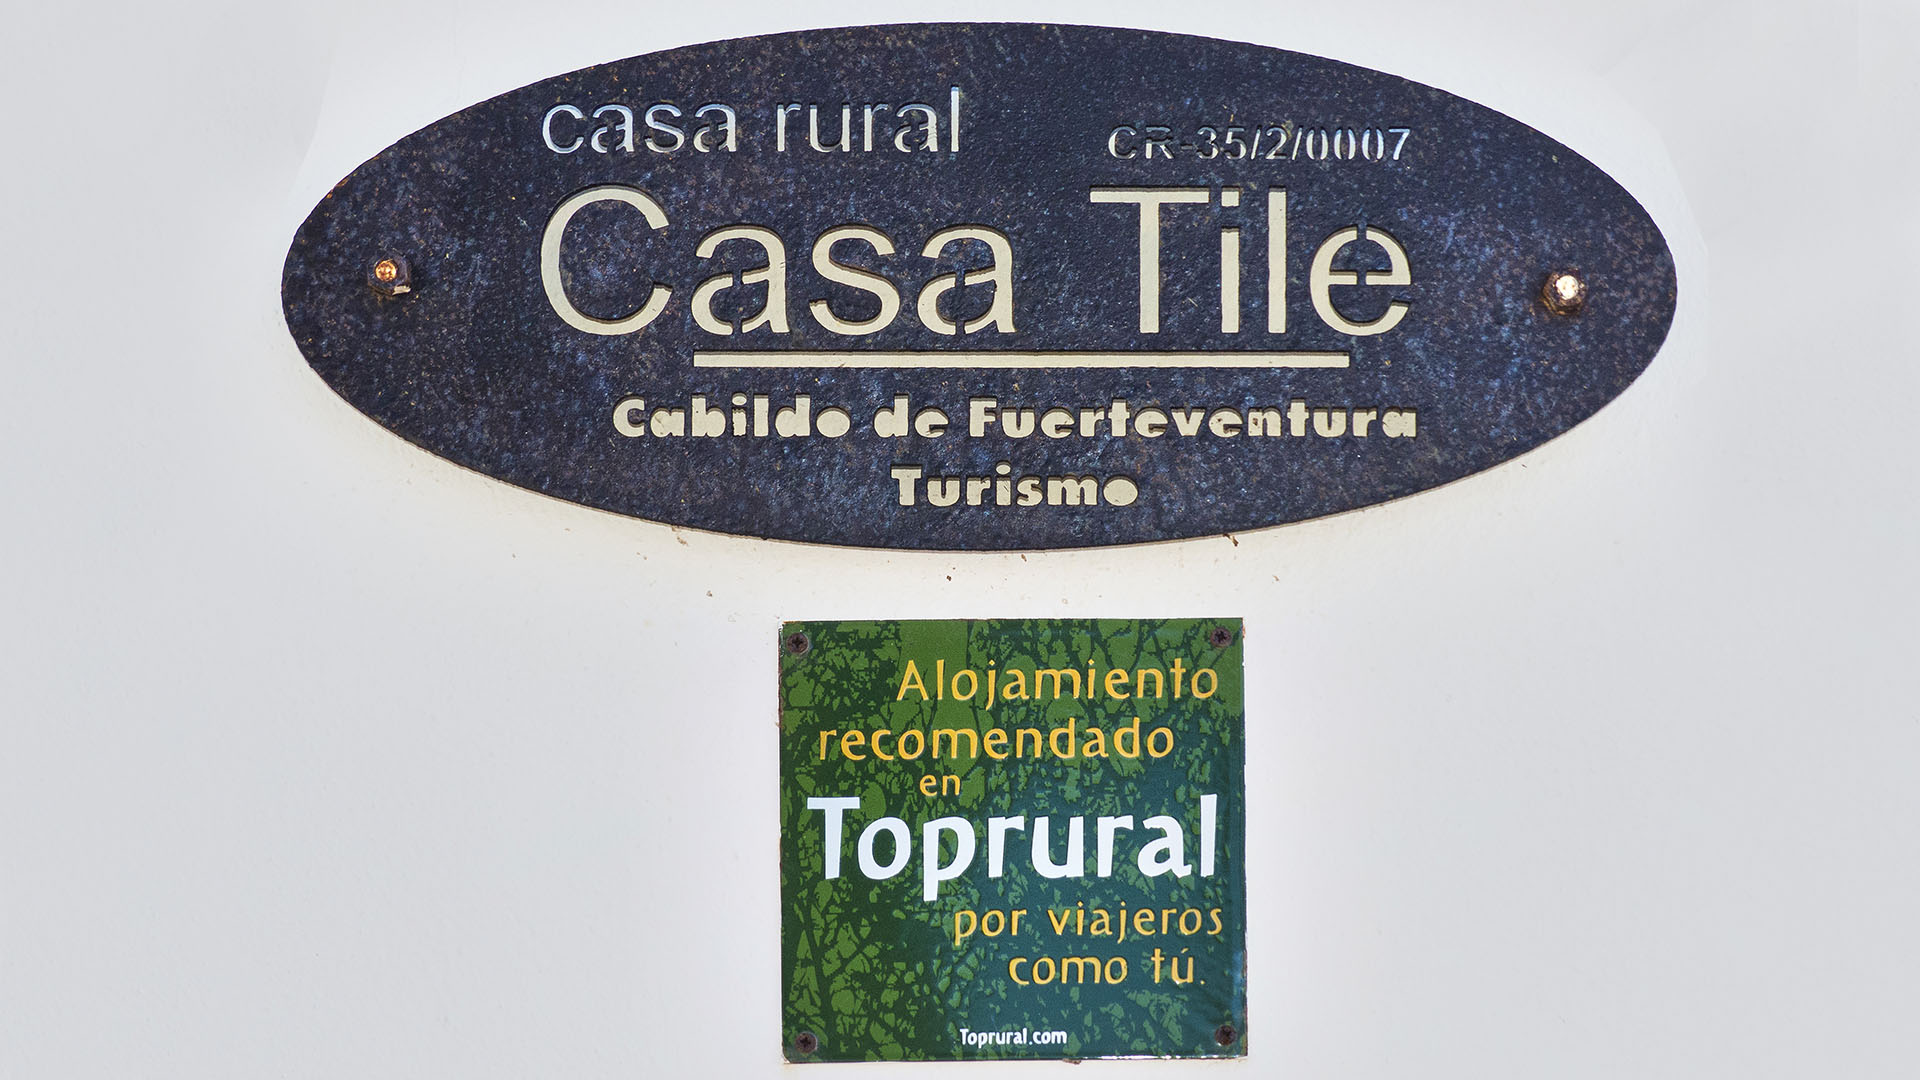 Casa Rural - Toprural Cabildo de Fuerteventura Turismo.